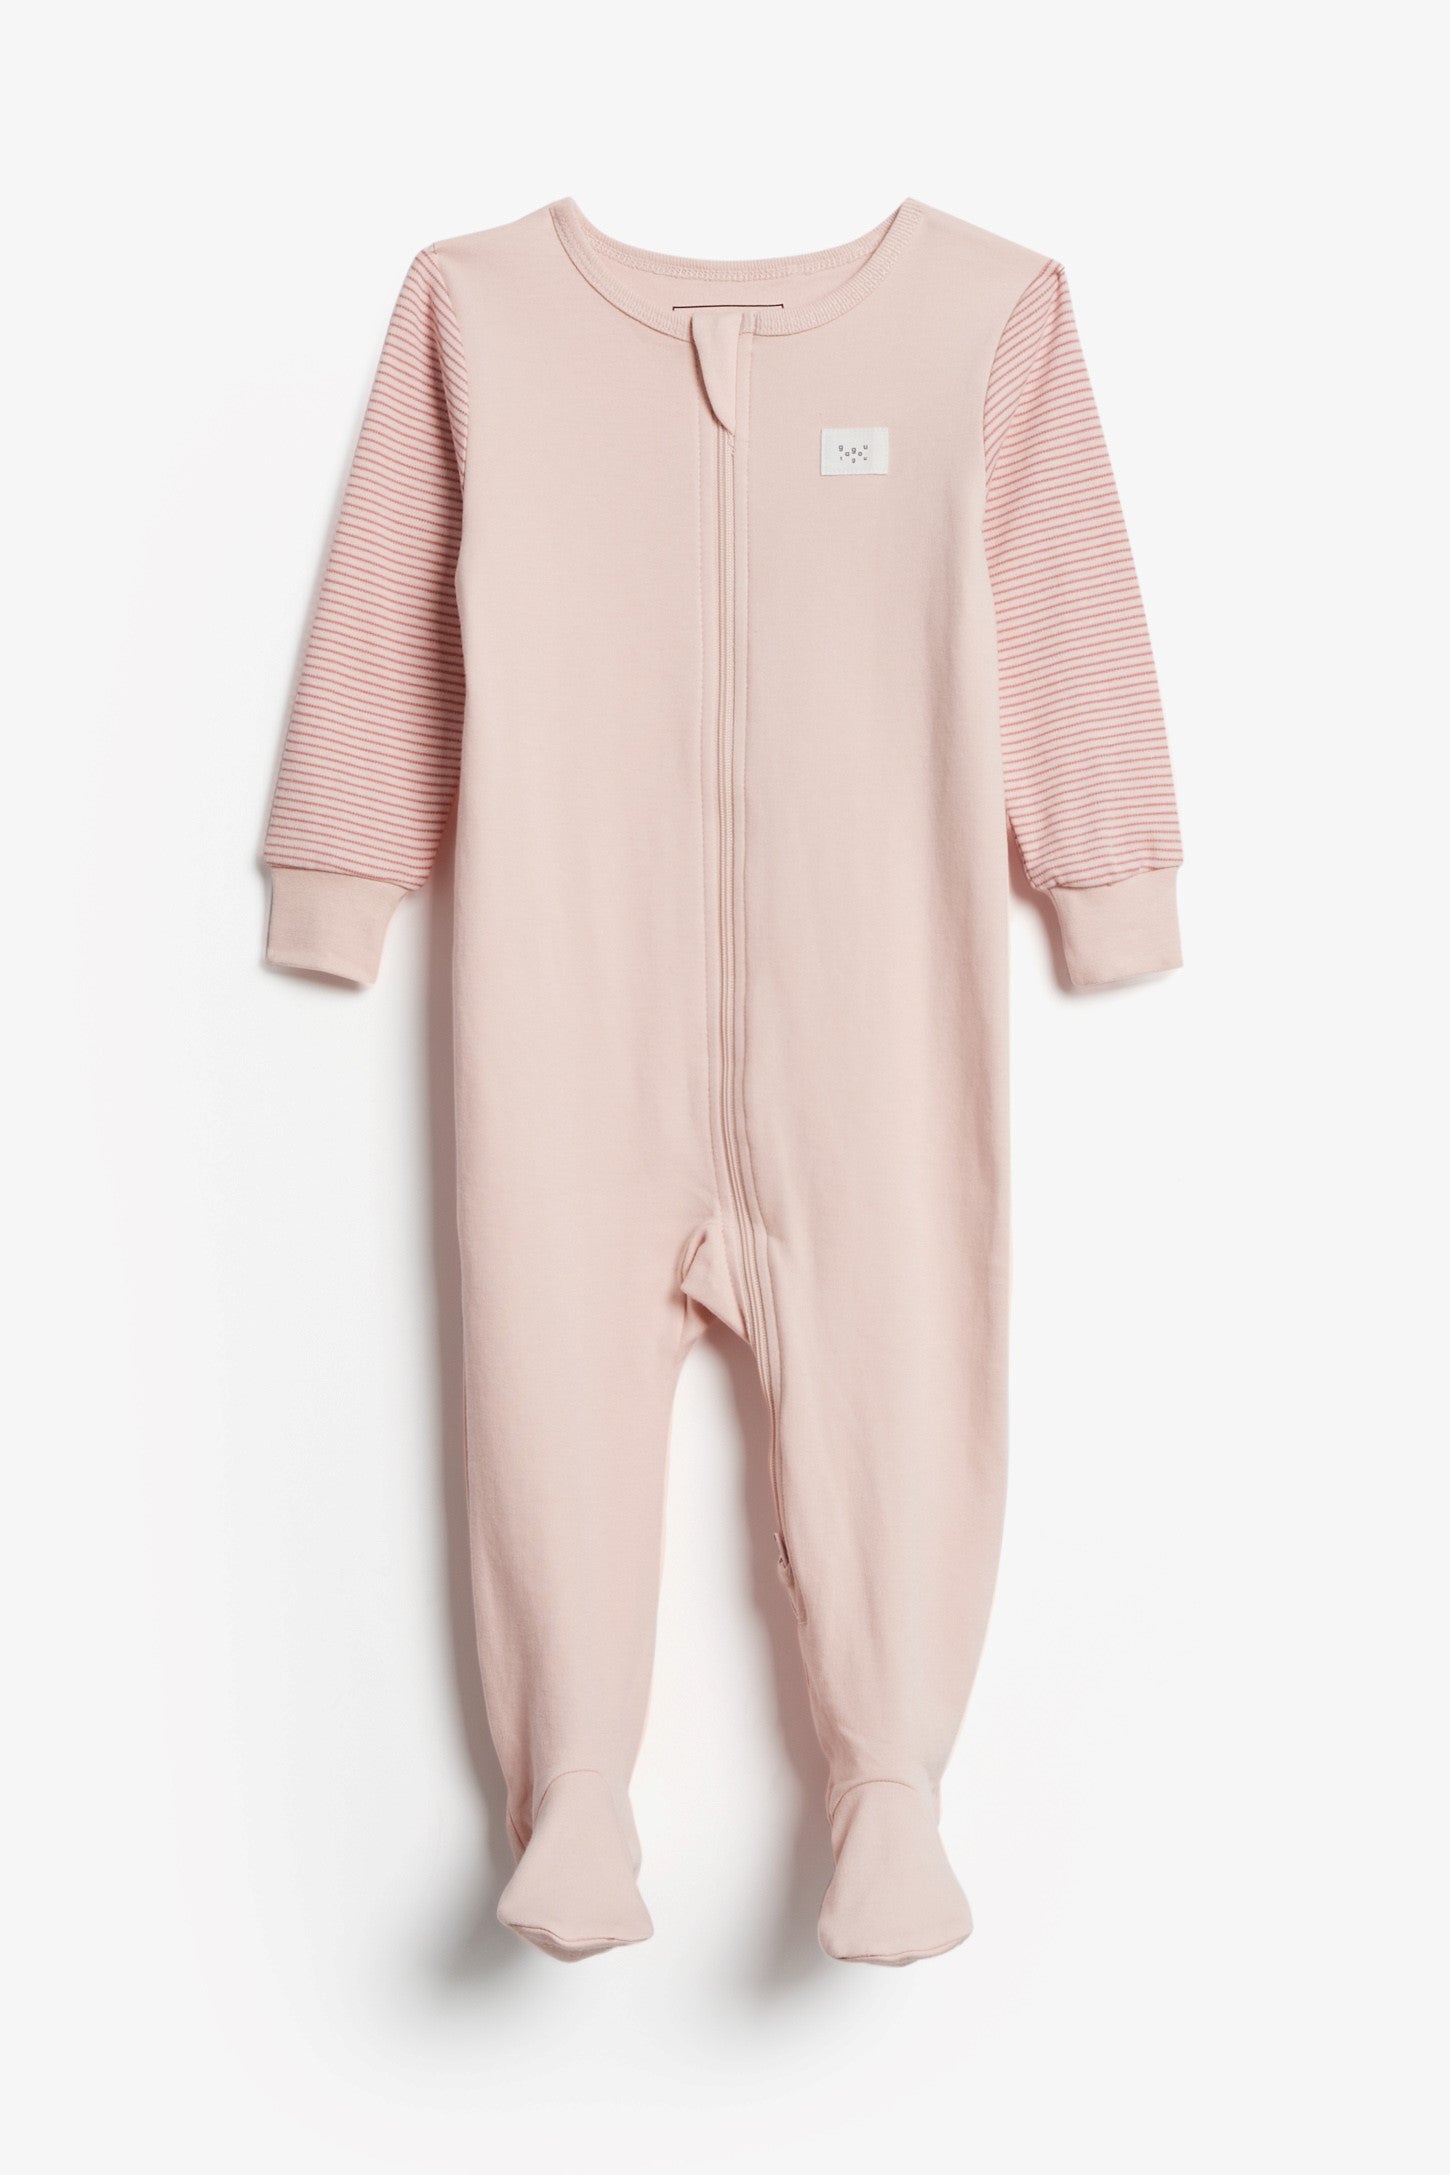 Pyjama 1-pièce imprimé, coton bio, 2T-3T - Bébé && ROSE